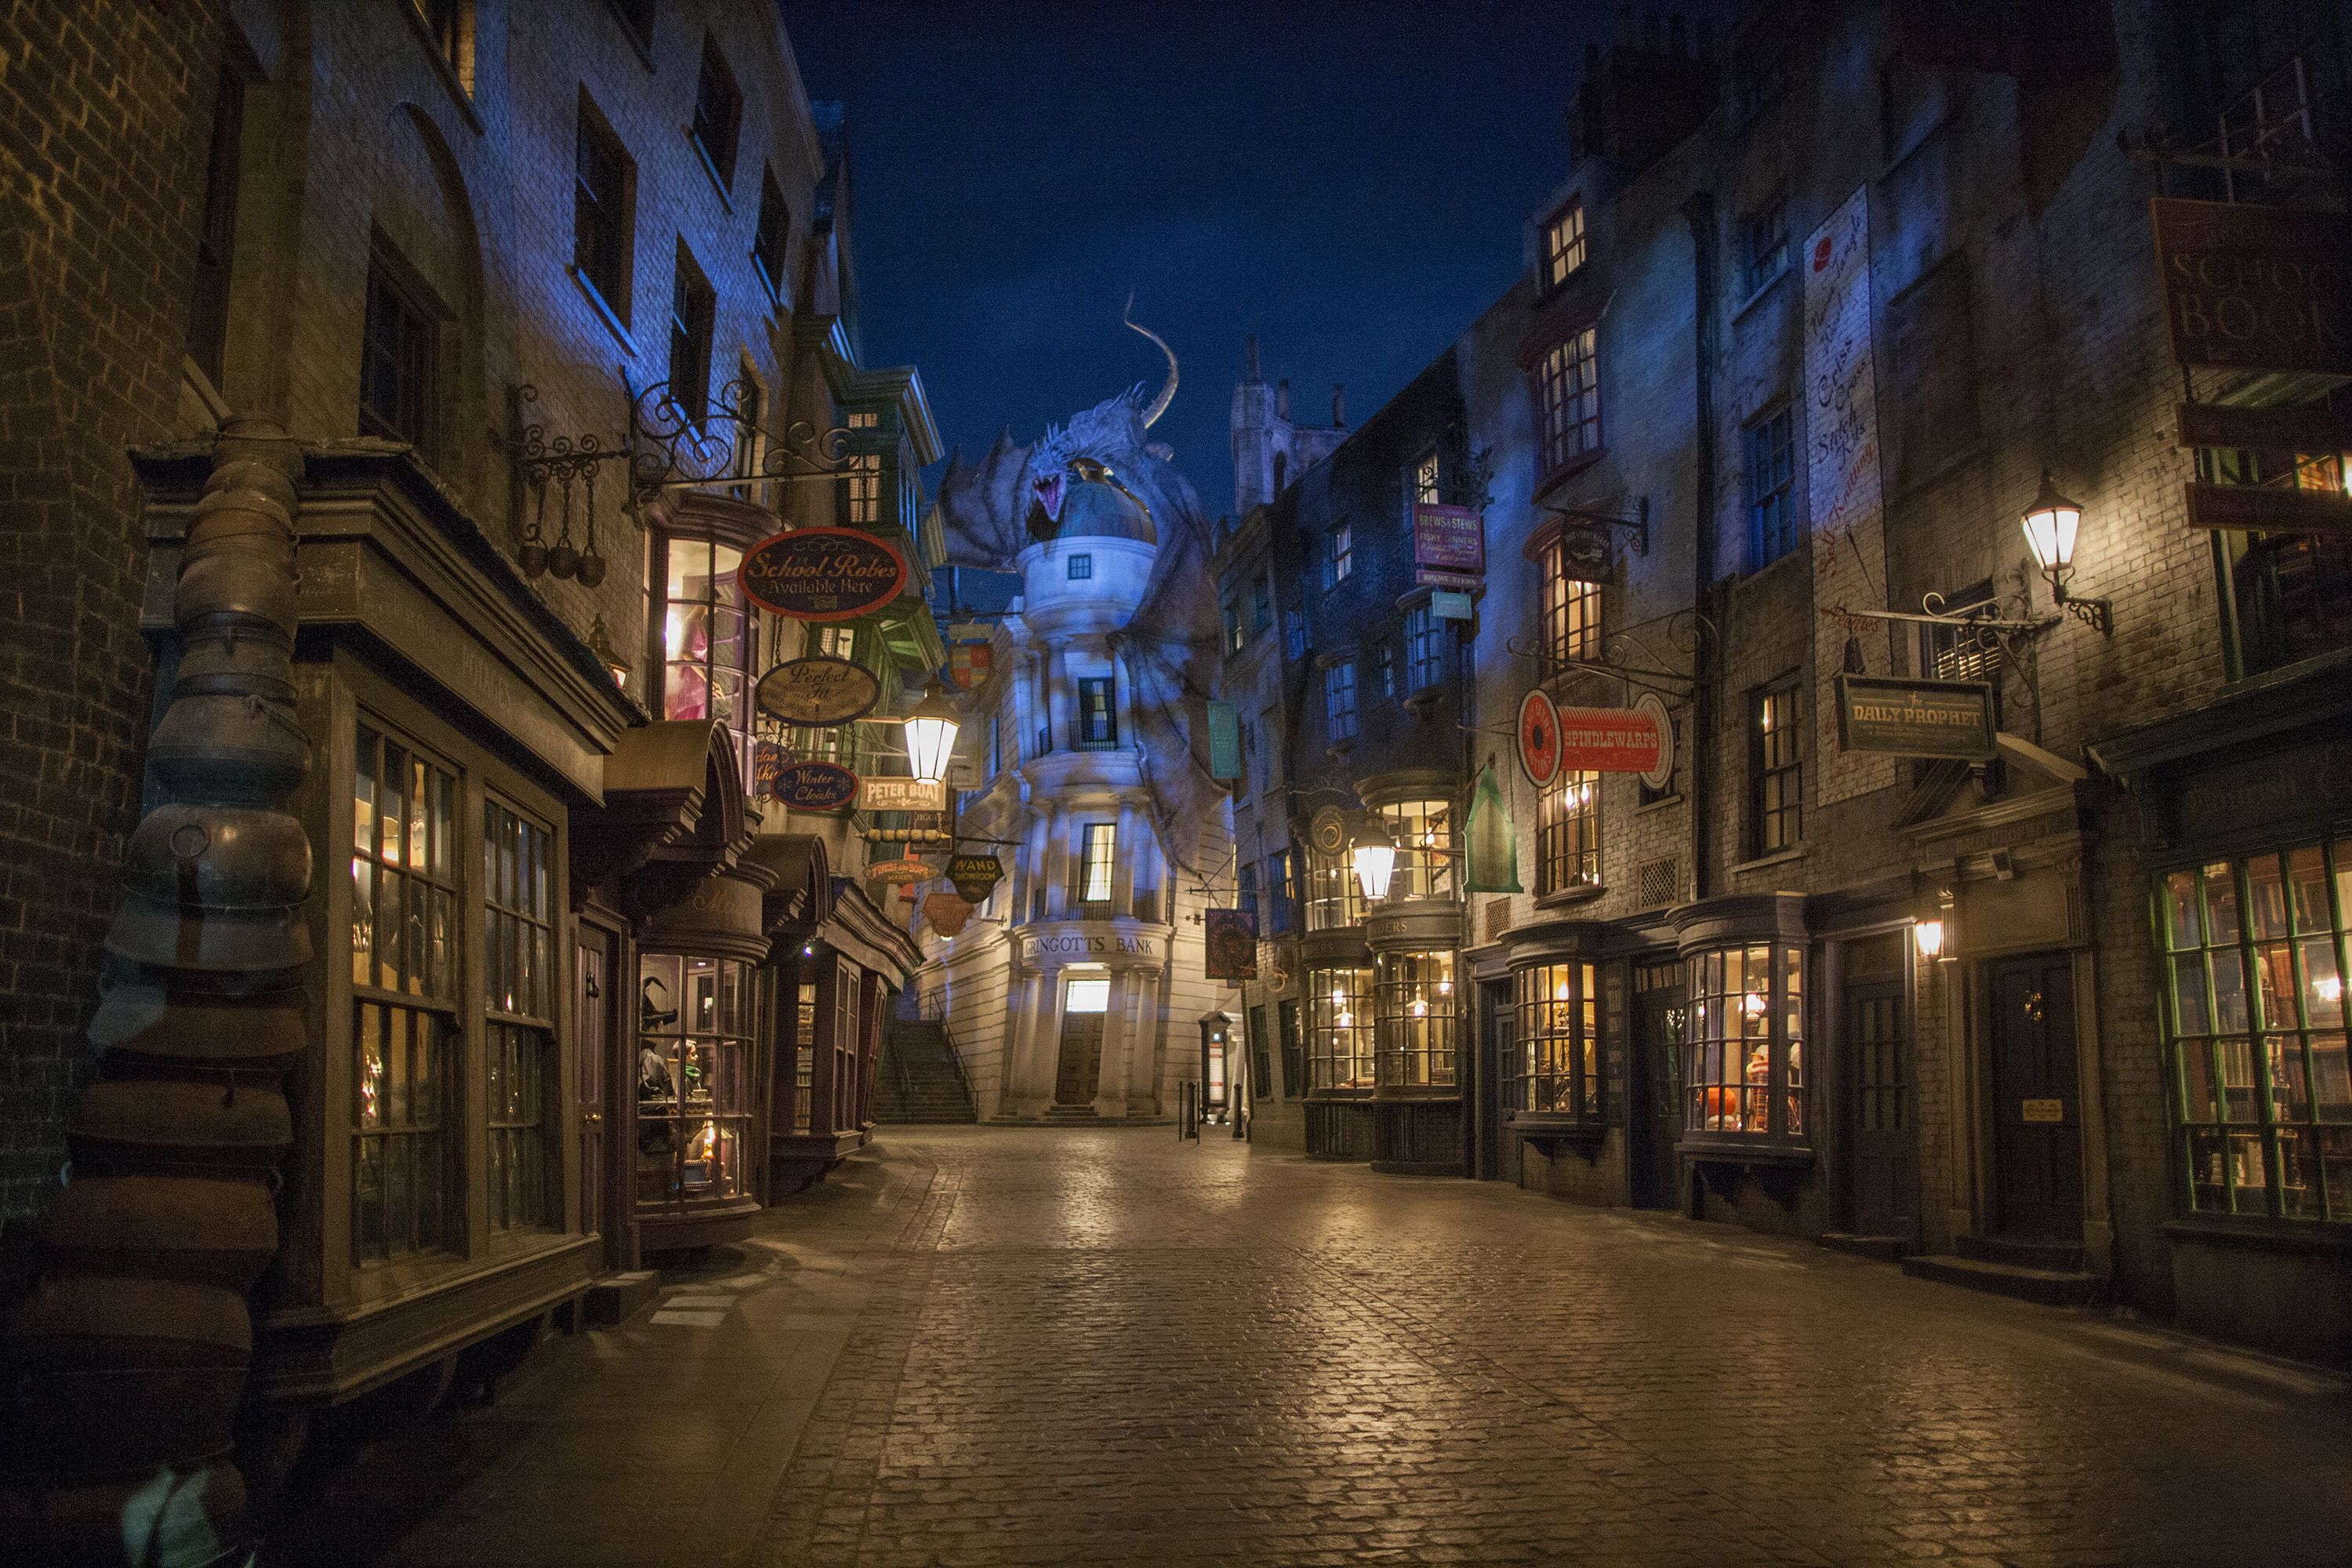 Diagon Alley: Orlando's Wizarding World of Harry Potter